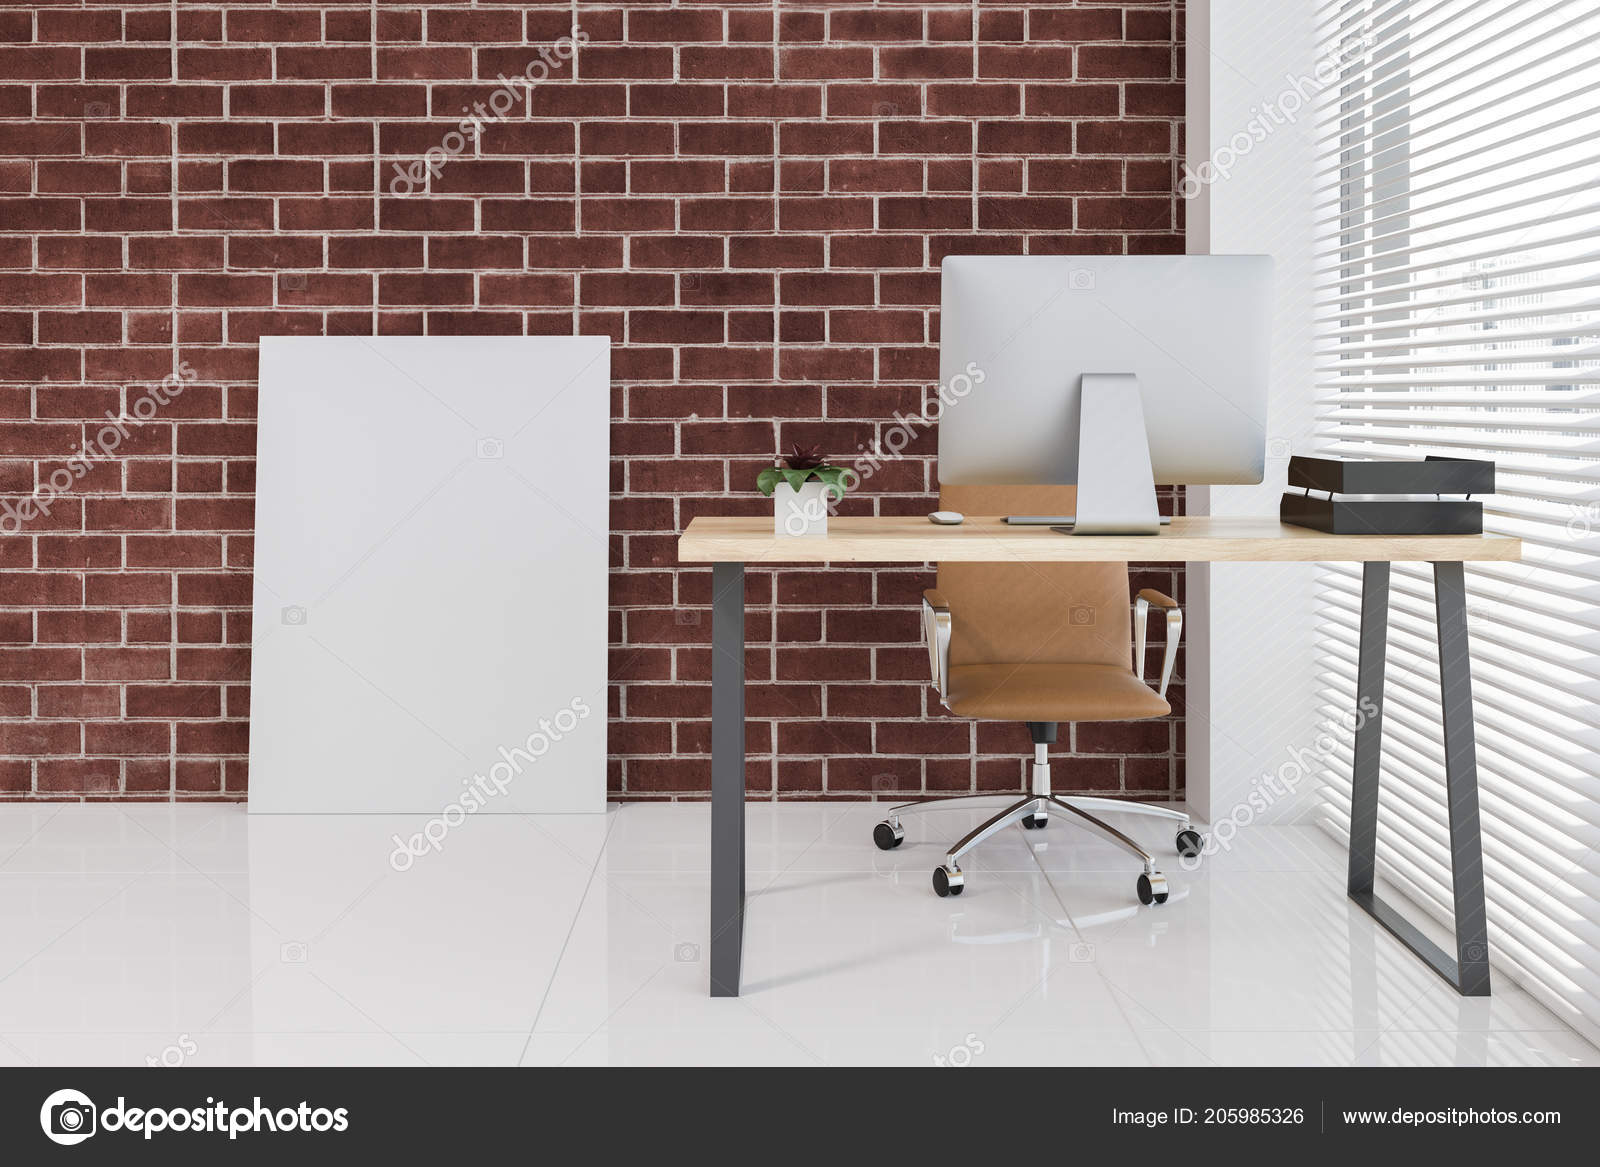 Brick Scandinavian Style Office Workplace Tiled Floor Computer